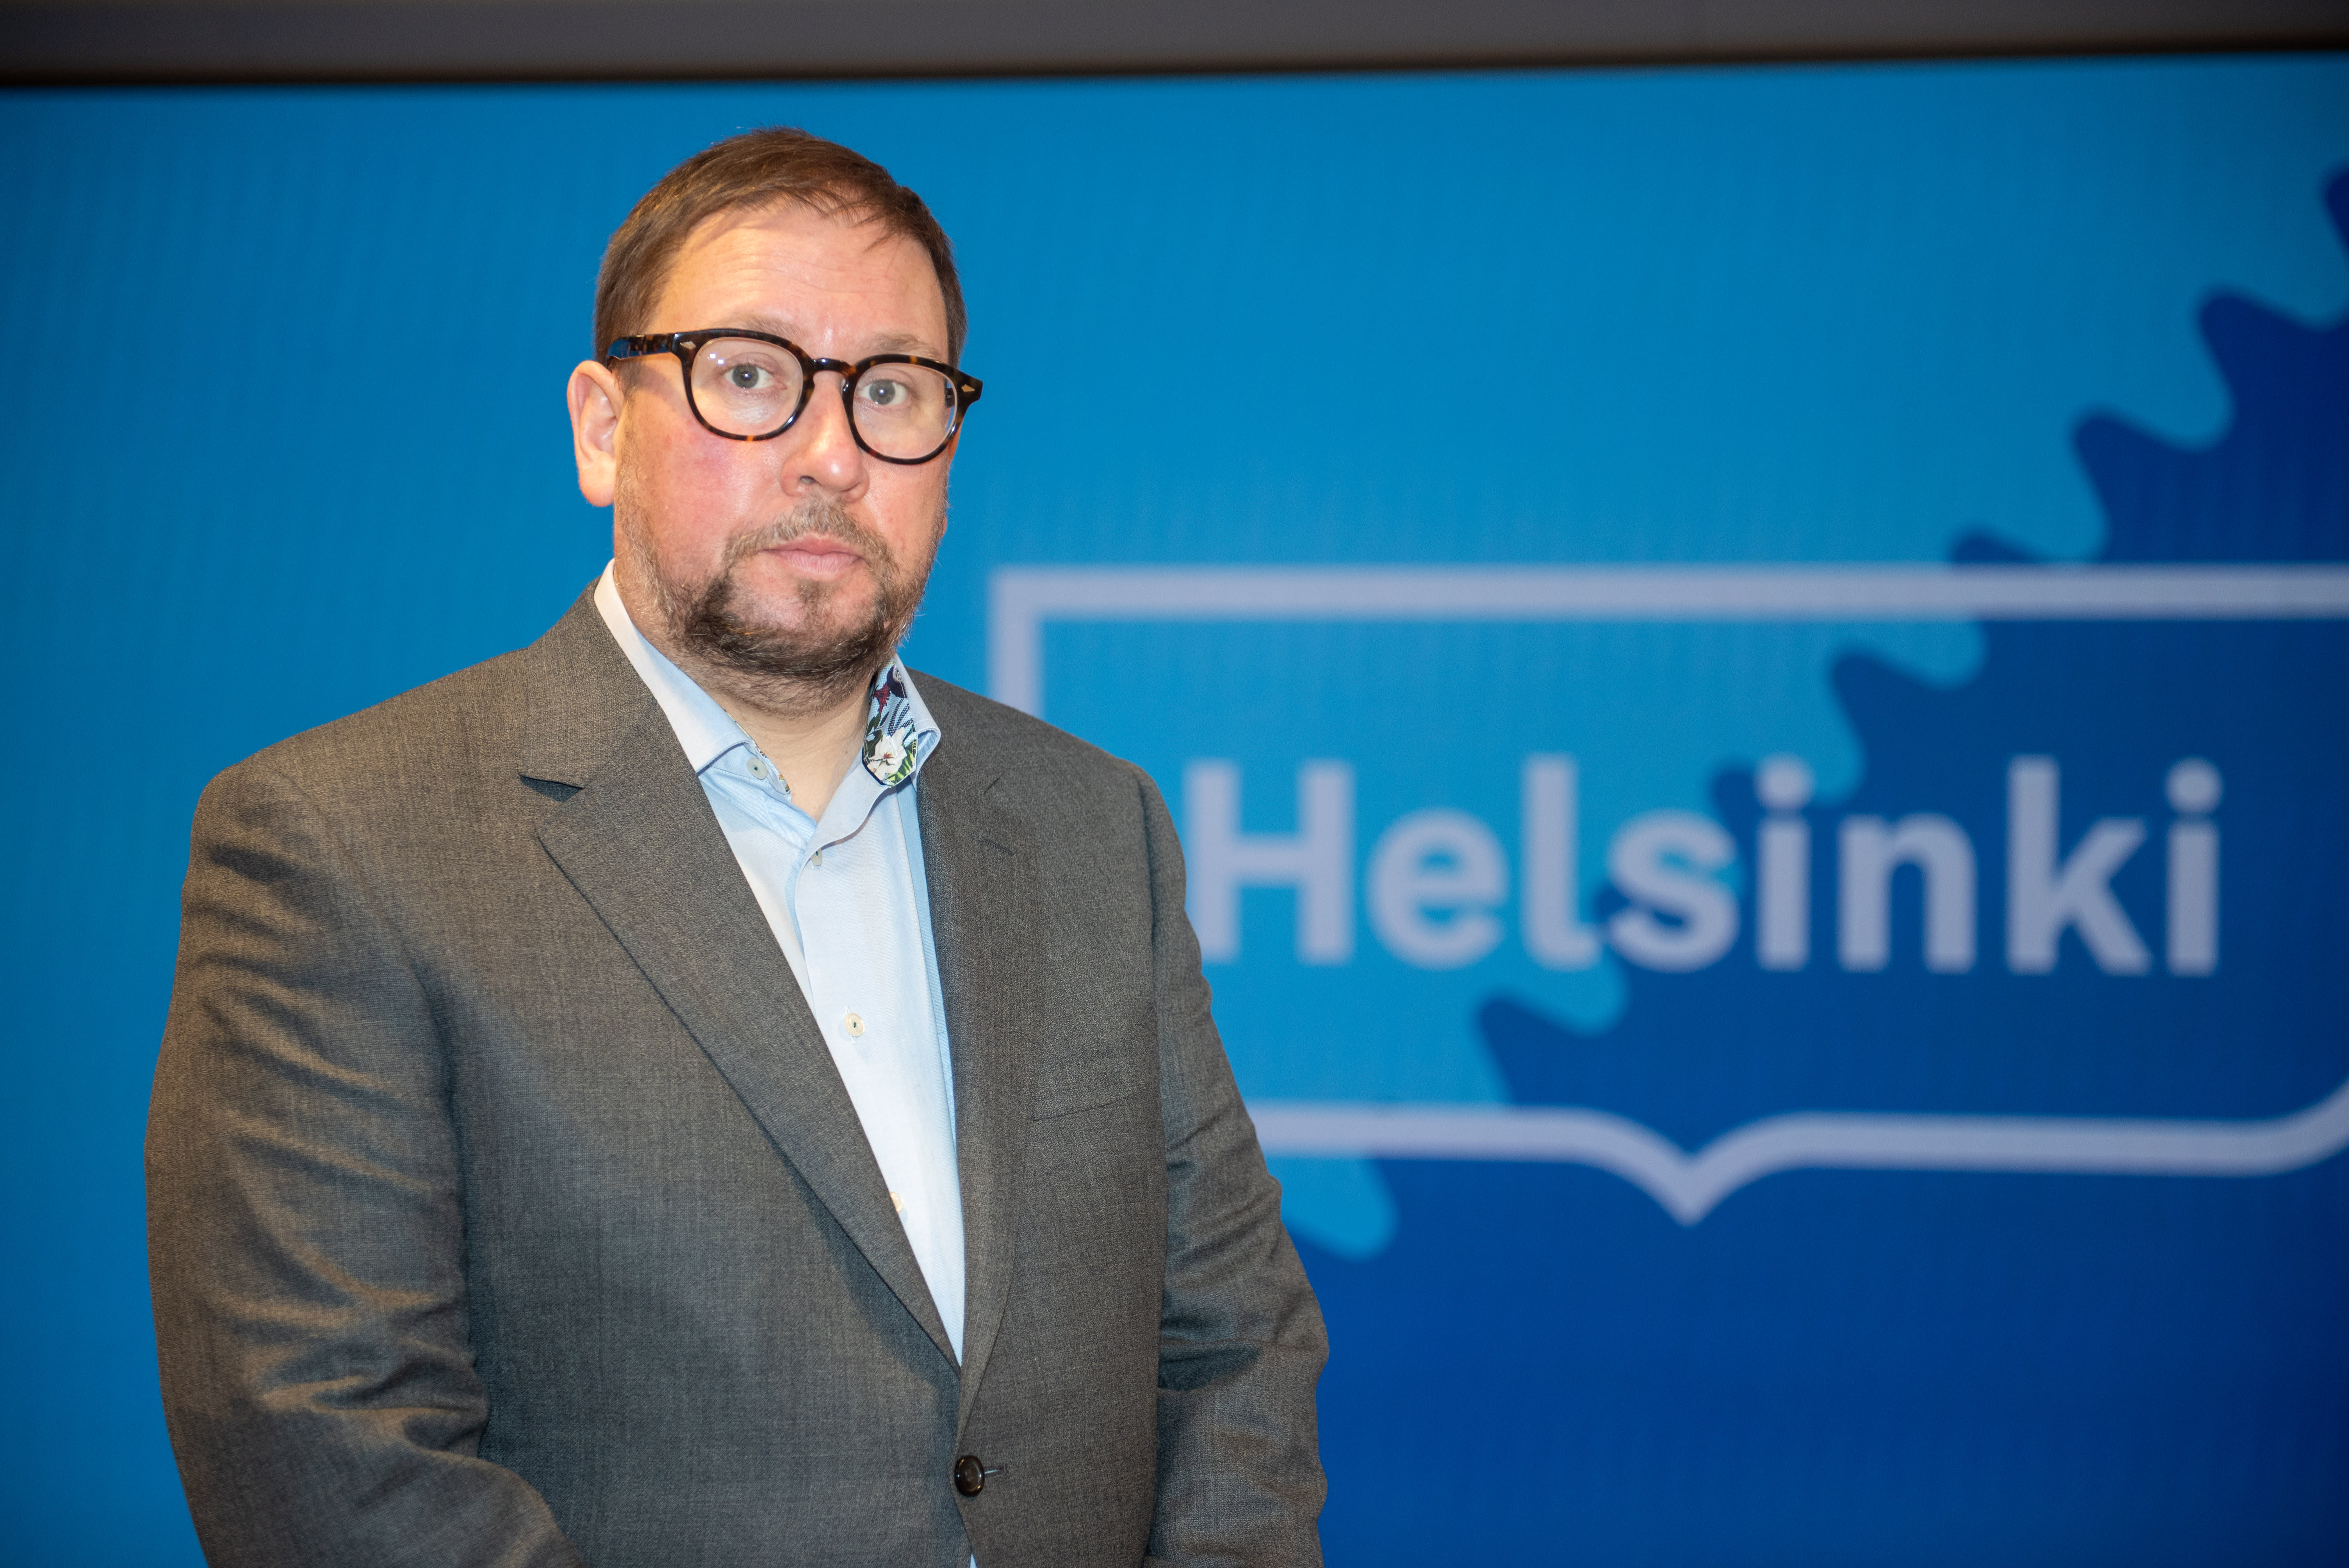 The deputy mayor of Helsinki downplays the clash with the football supervisors